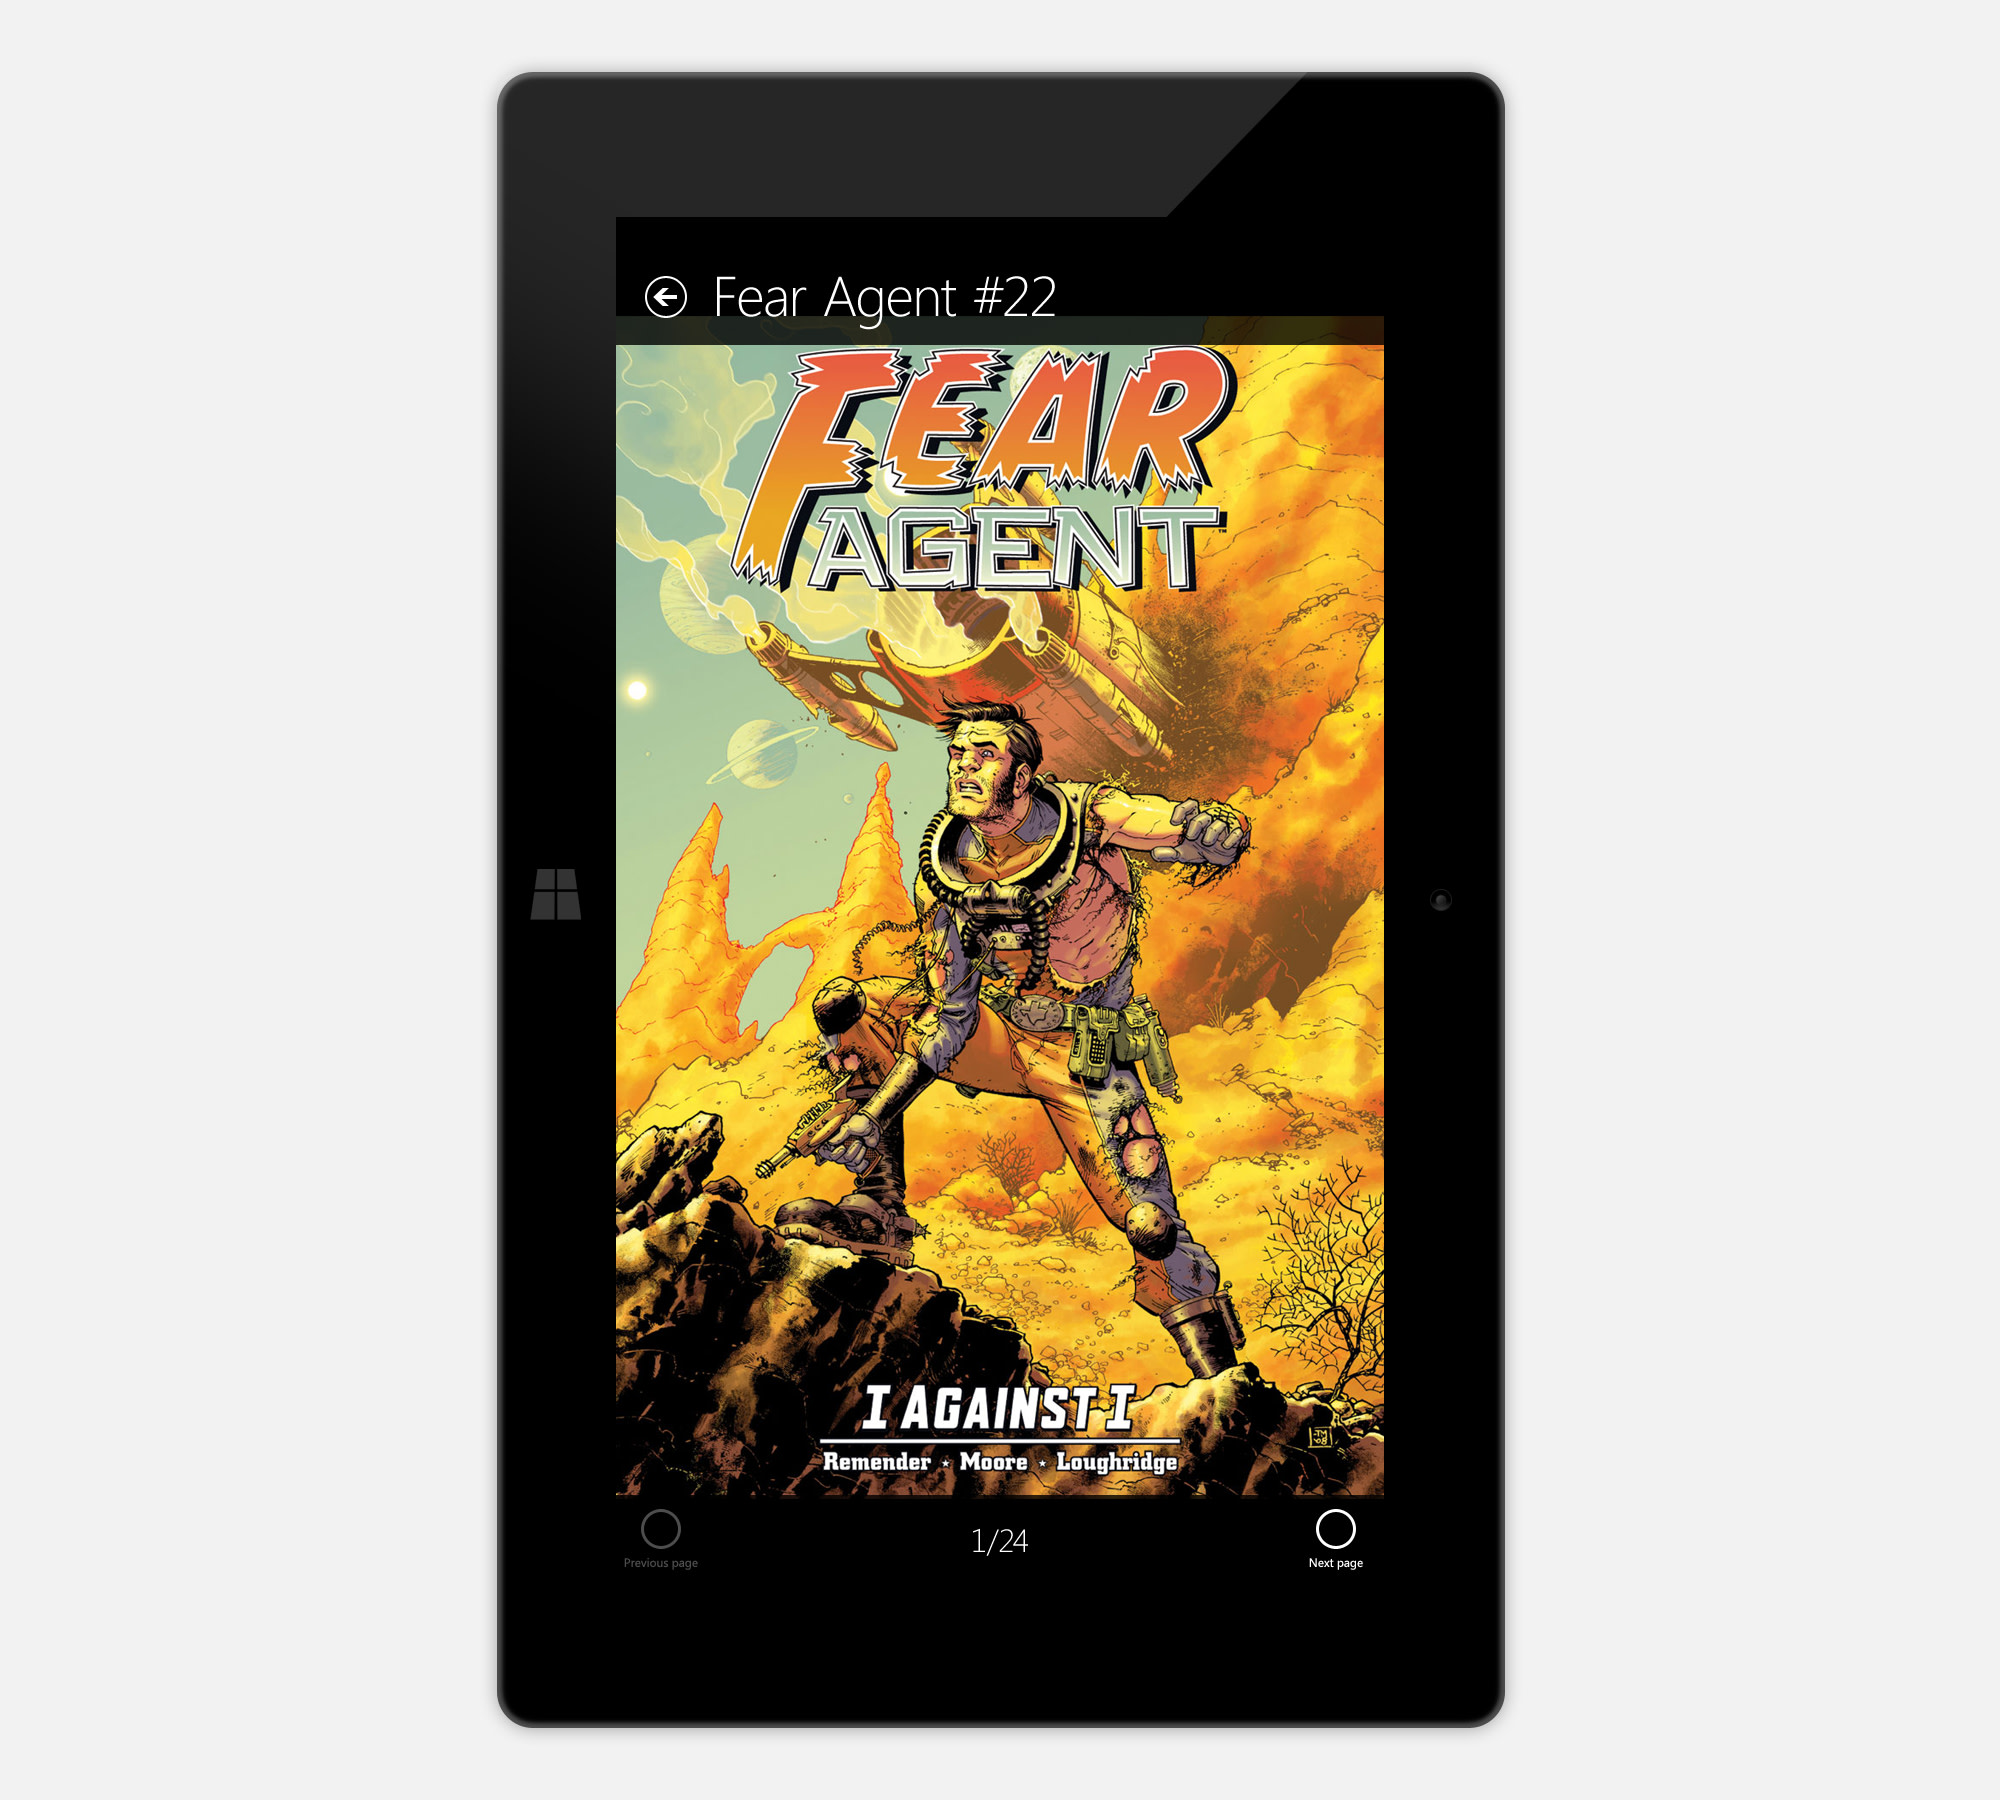 Comics for Windows 8: reading-portrait-full-controls